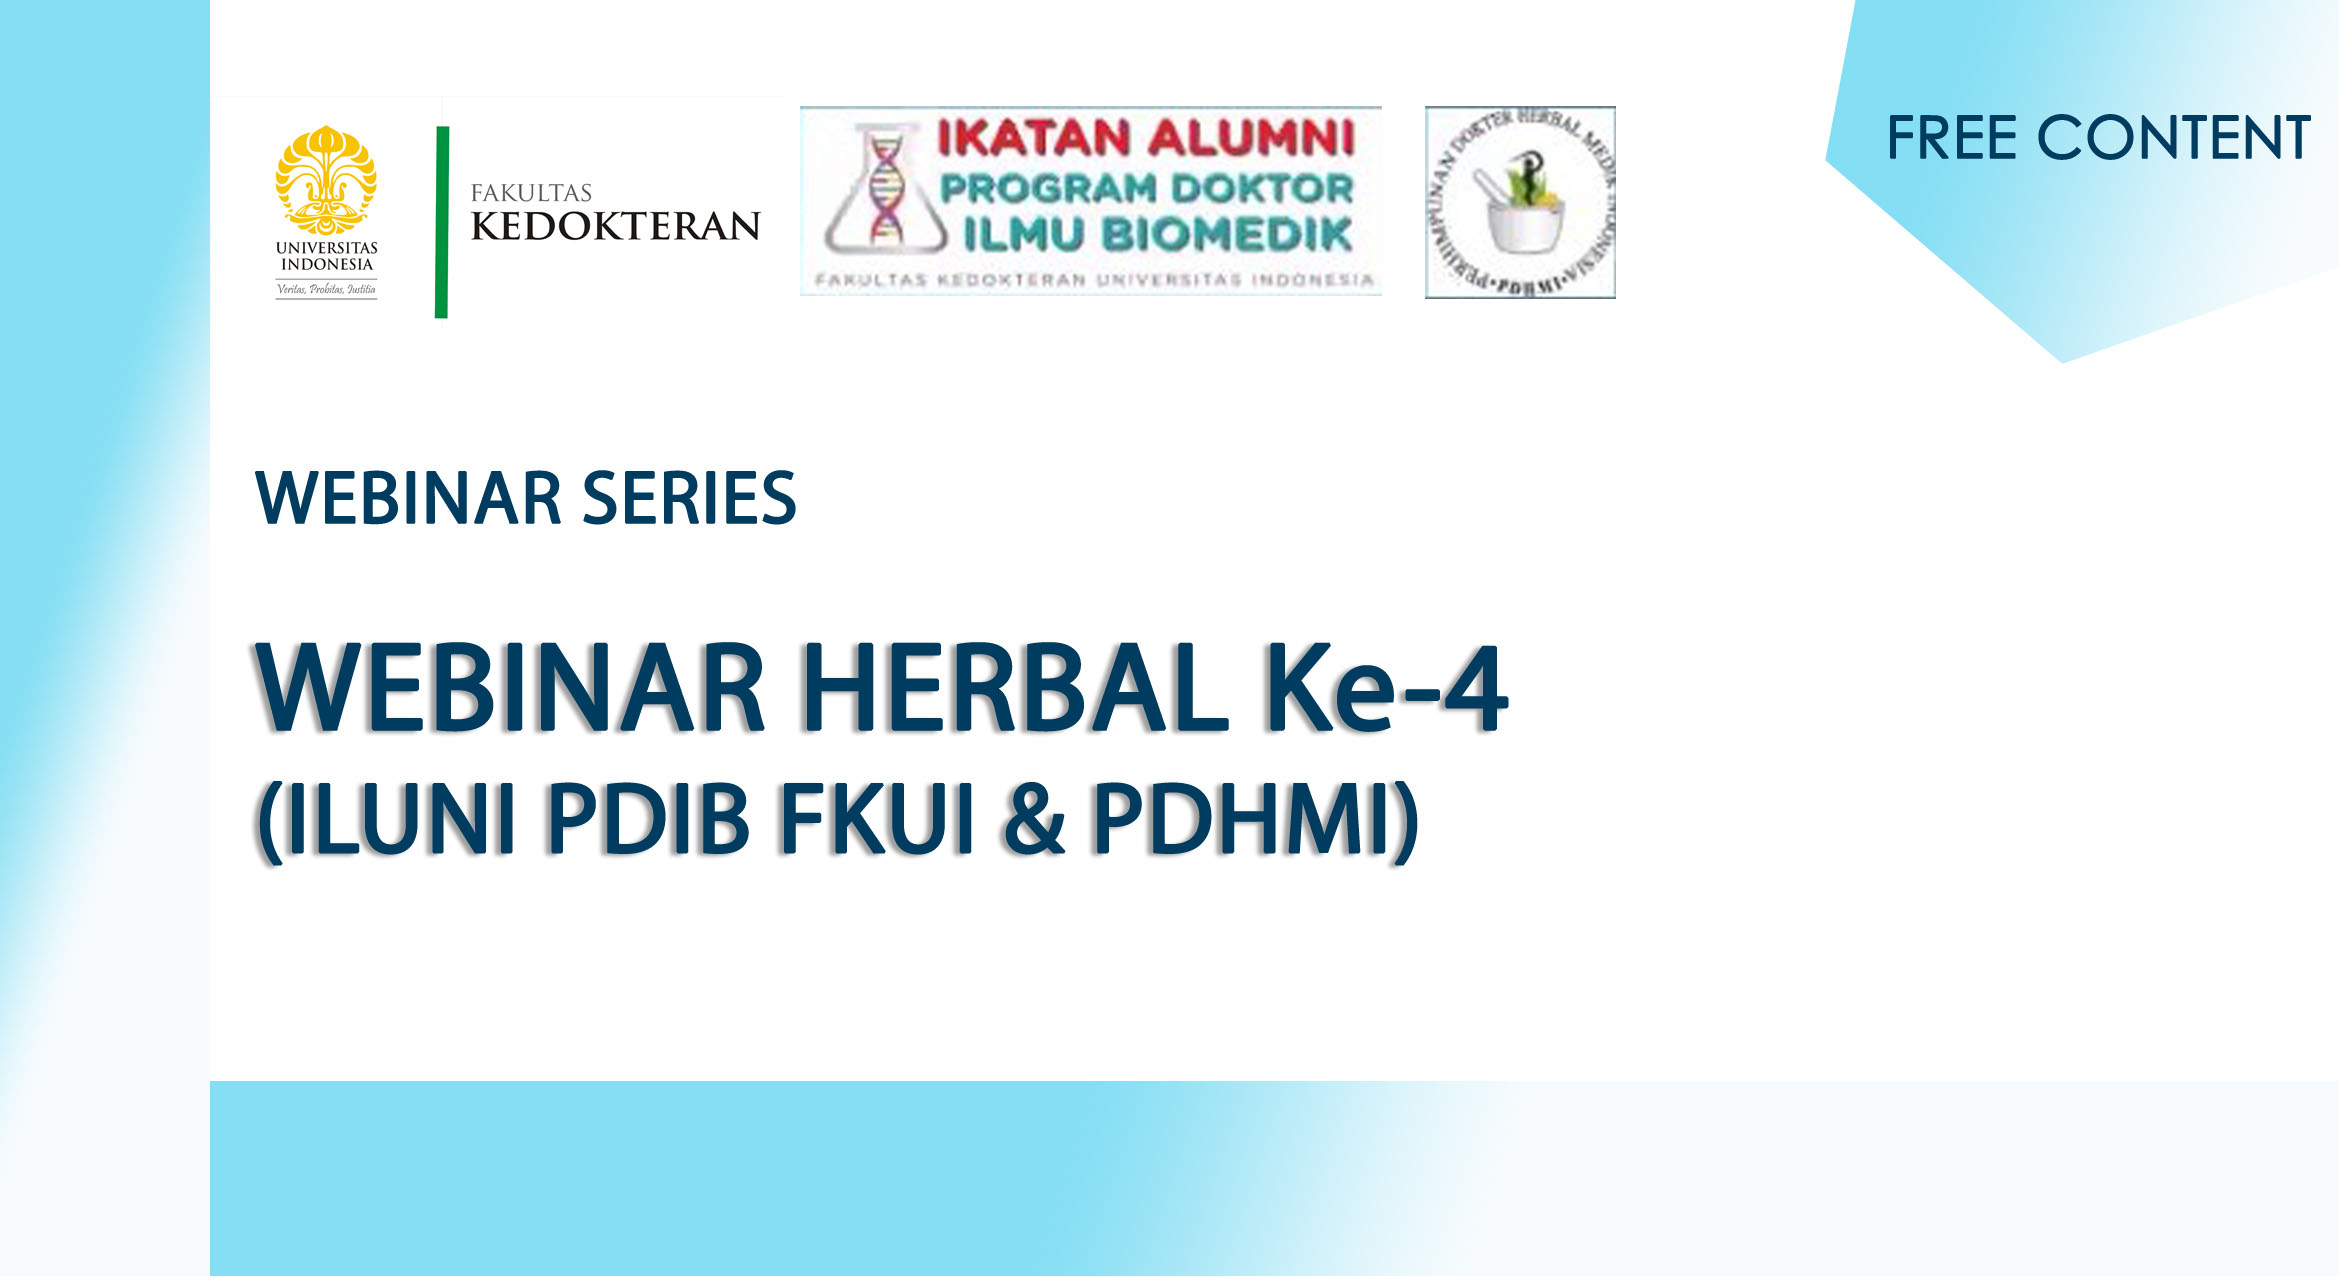 Webinar Herbal Series Ke-4 ILUNI PDIB & PDHMI Special Update COVID-19